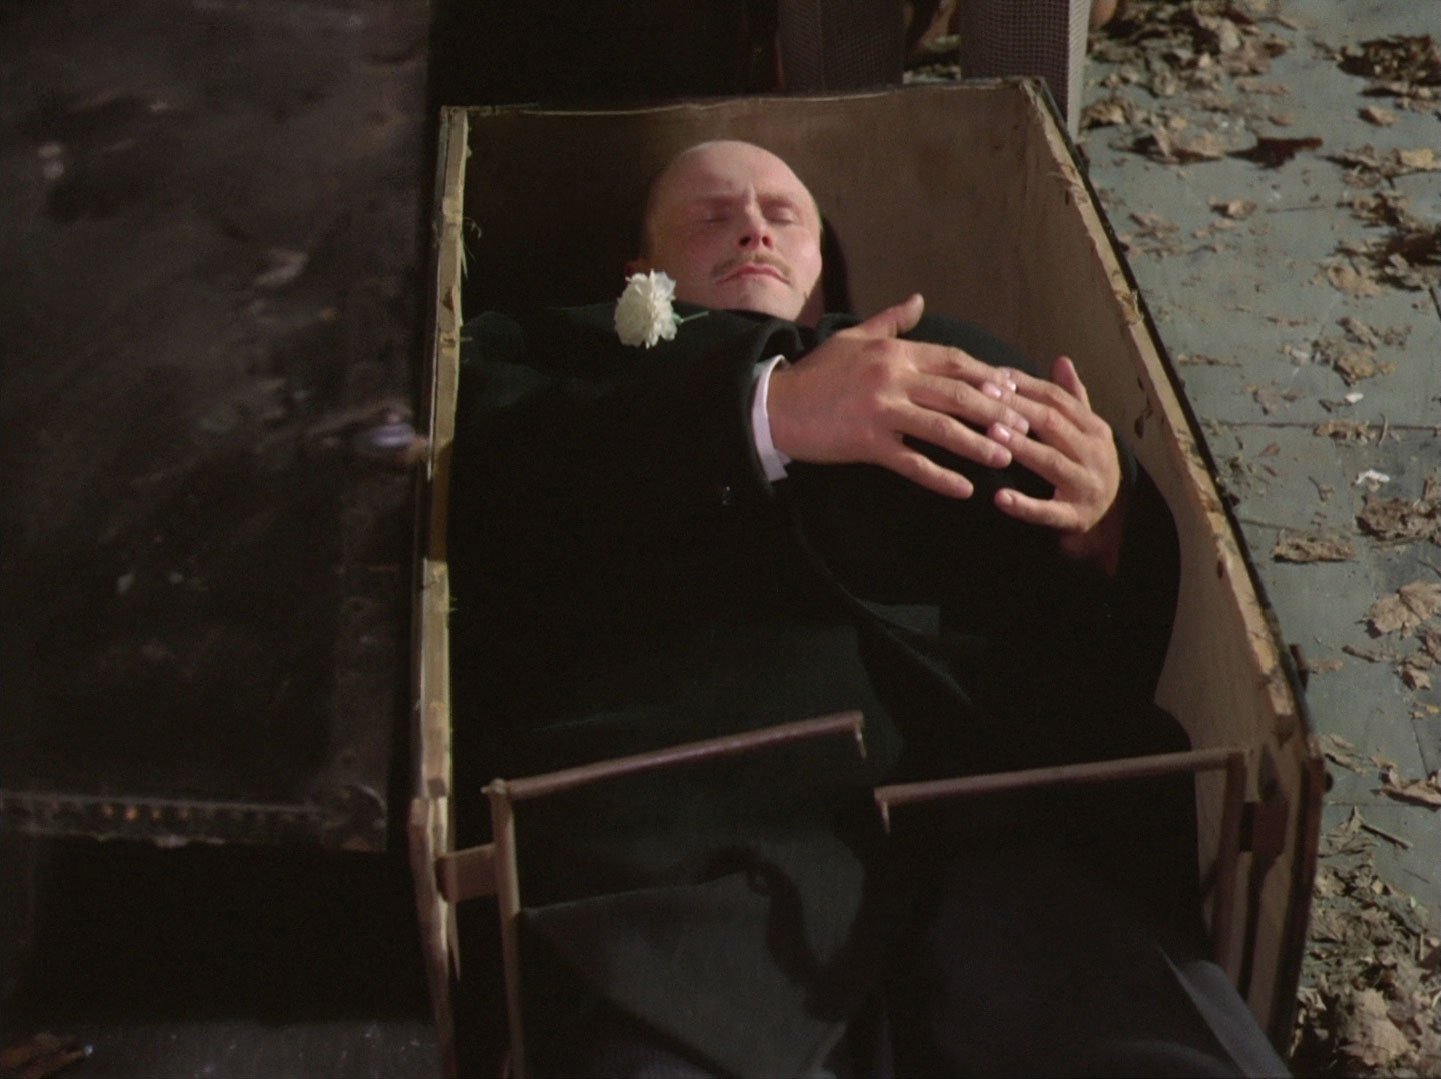 A corpse in a casket